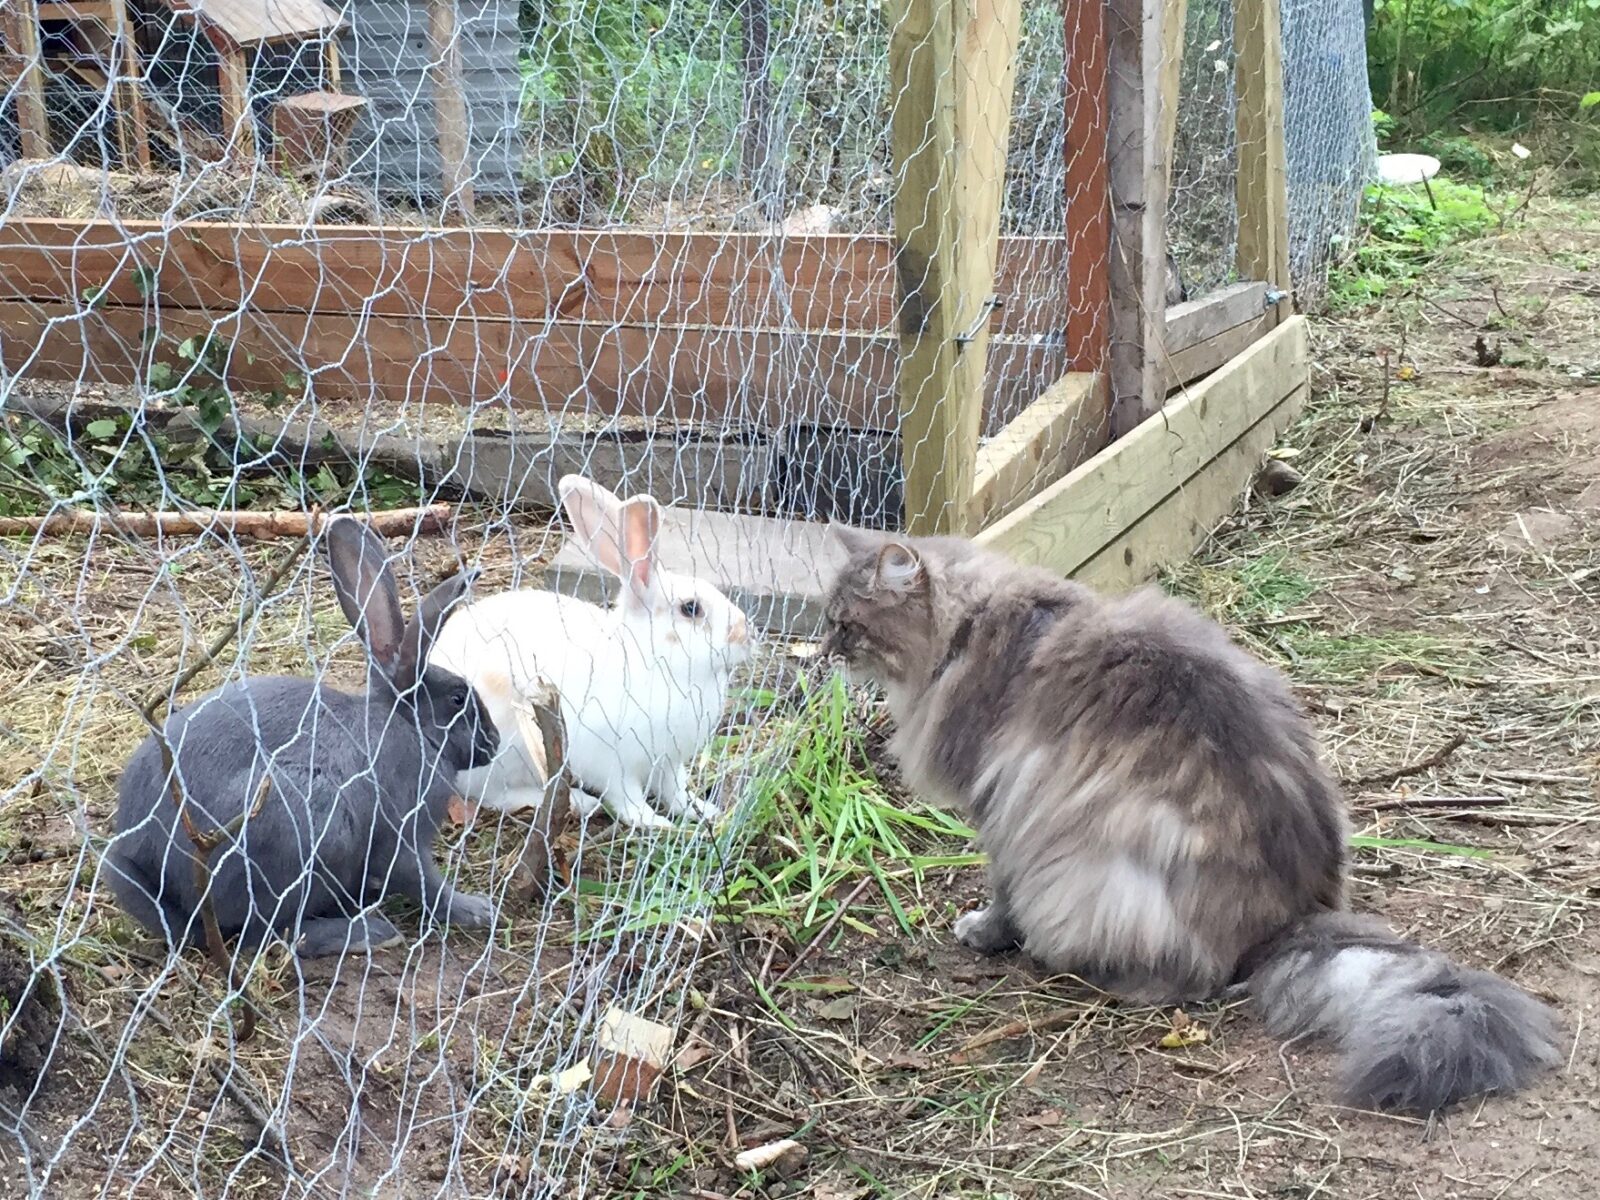 Animal meeting rabbit and cat 
Ullstorps stugor
